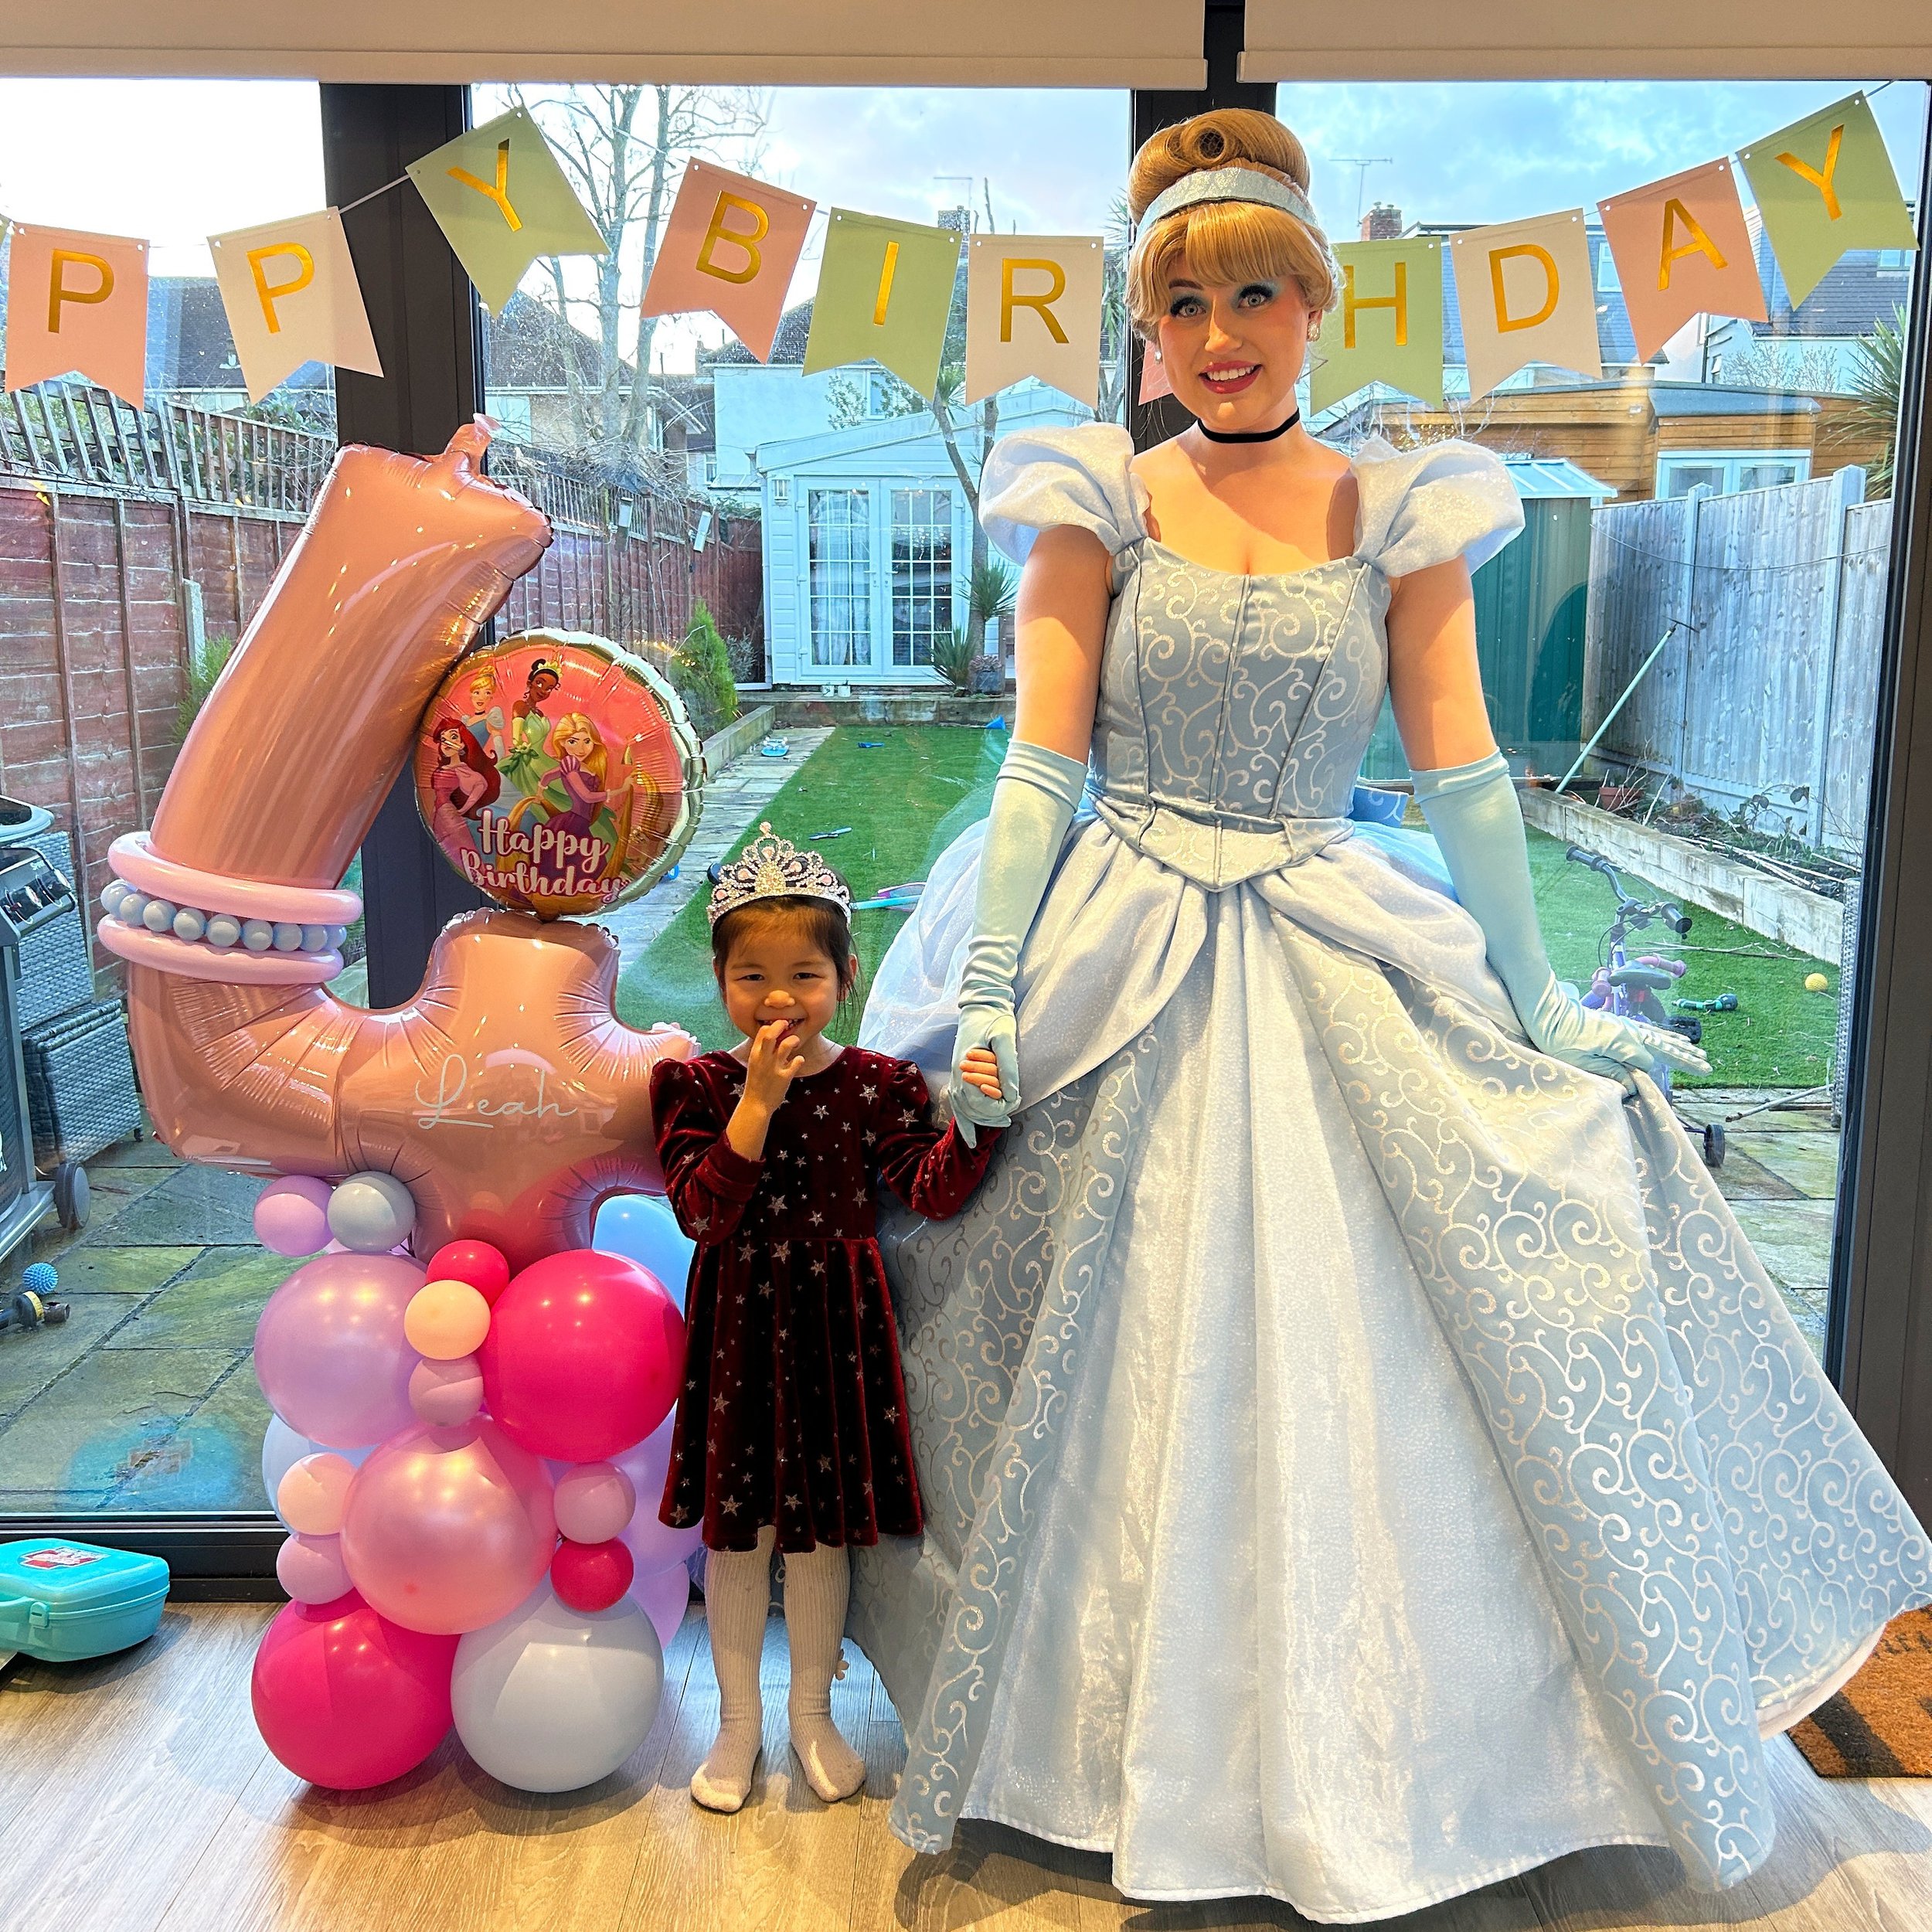 This birthday princess enjoyed a one hour party with our Glass Slipper Princess!💙

#WhereTheMagicBegins
💻www.magicalprincesspartiesessex.com
📲 07375495682
📧magicalprincesspartiesessex@gmail.com

#essexmums #hertfordshiremums #princessparty #mumso